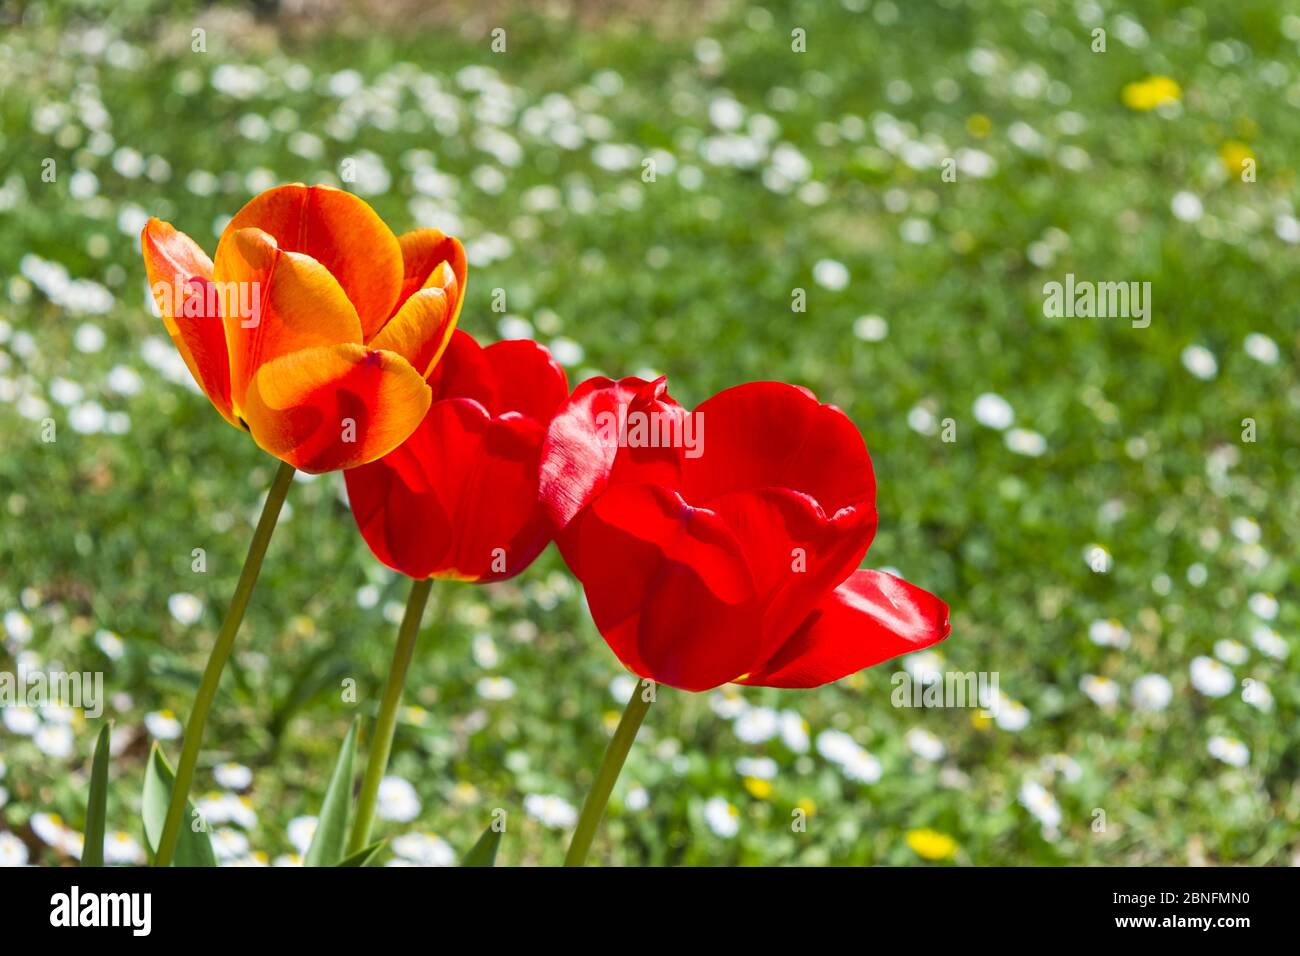 Selektive Fokus Aufnahme von bewundernswerten bunten Tulpen im Blumenfeld Stockfoto